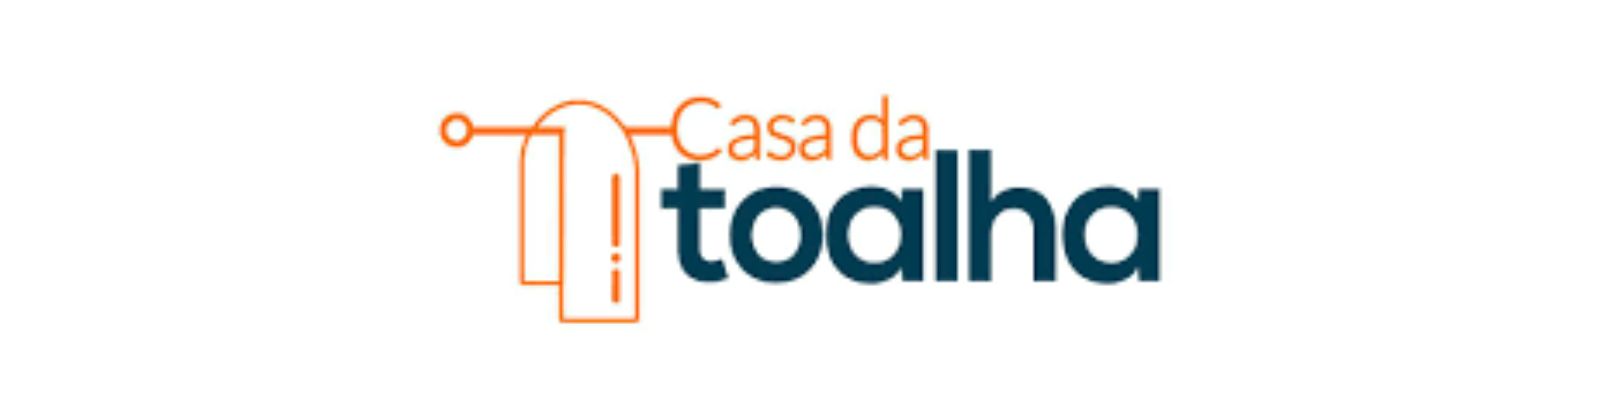 WhatsApp Casa da Toalha: Telefones e Canais de Contato!